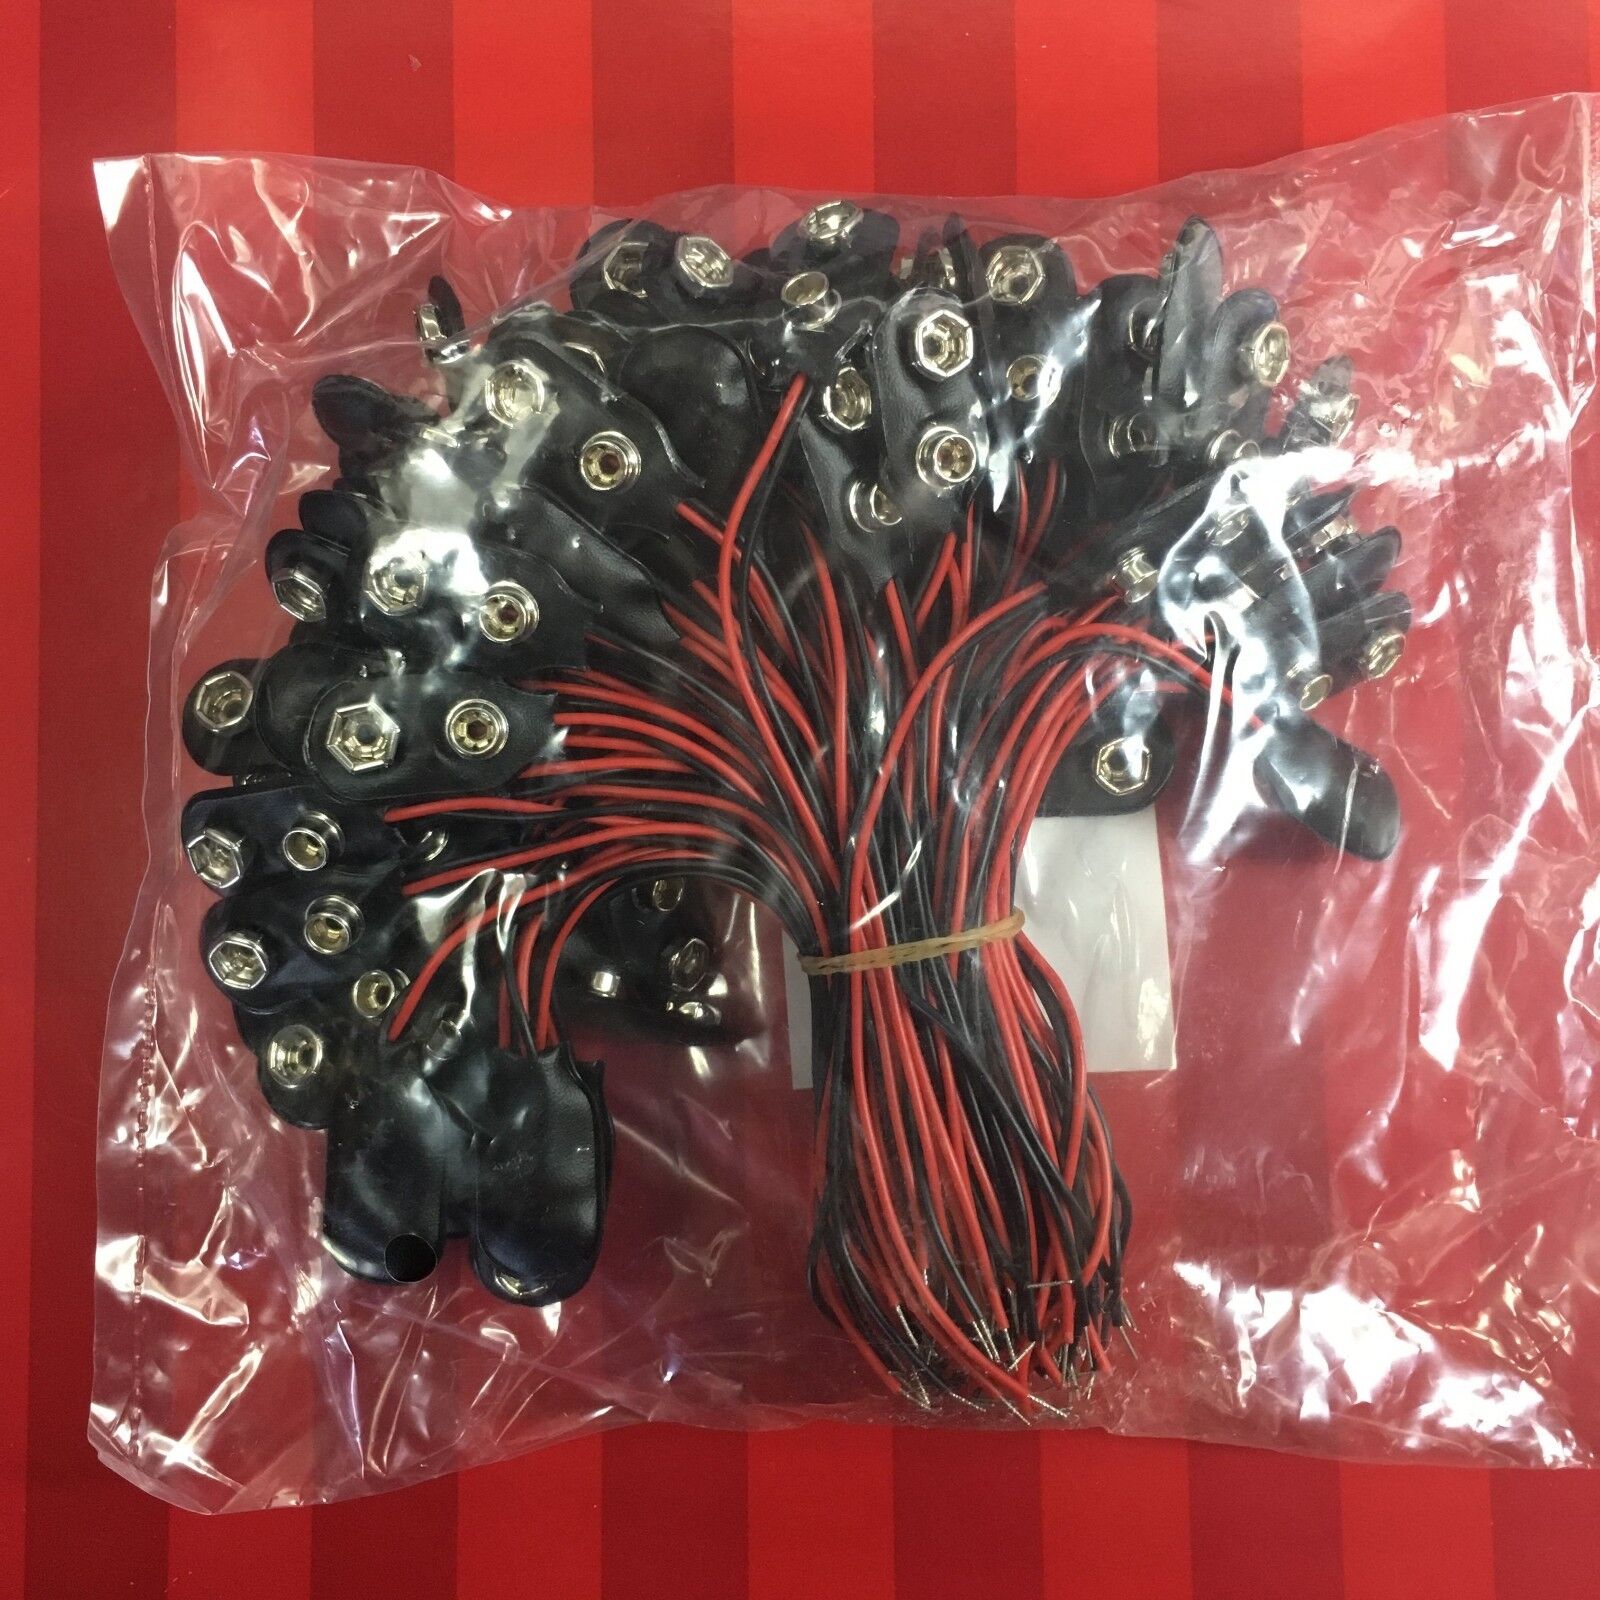 NEW 100 pack lot 9 Volt 9V battery clip snap on plugs connectors *USA Seller* Unbranded/Generic 9V-100